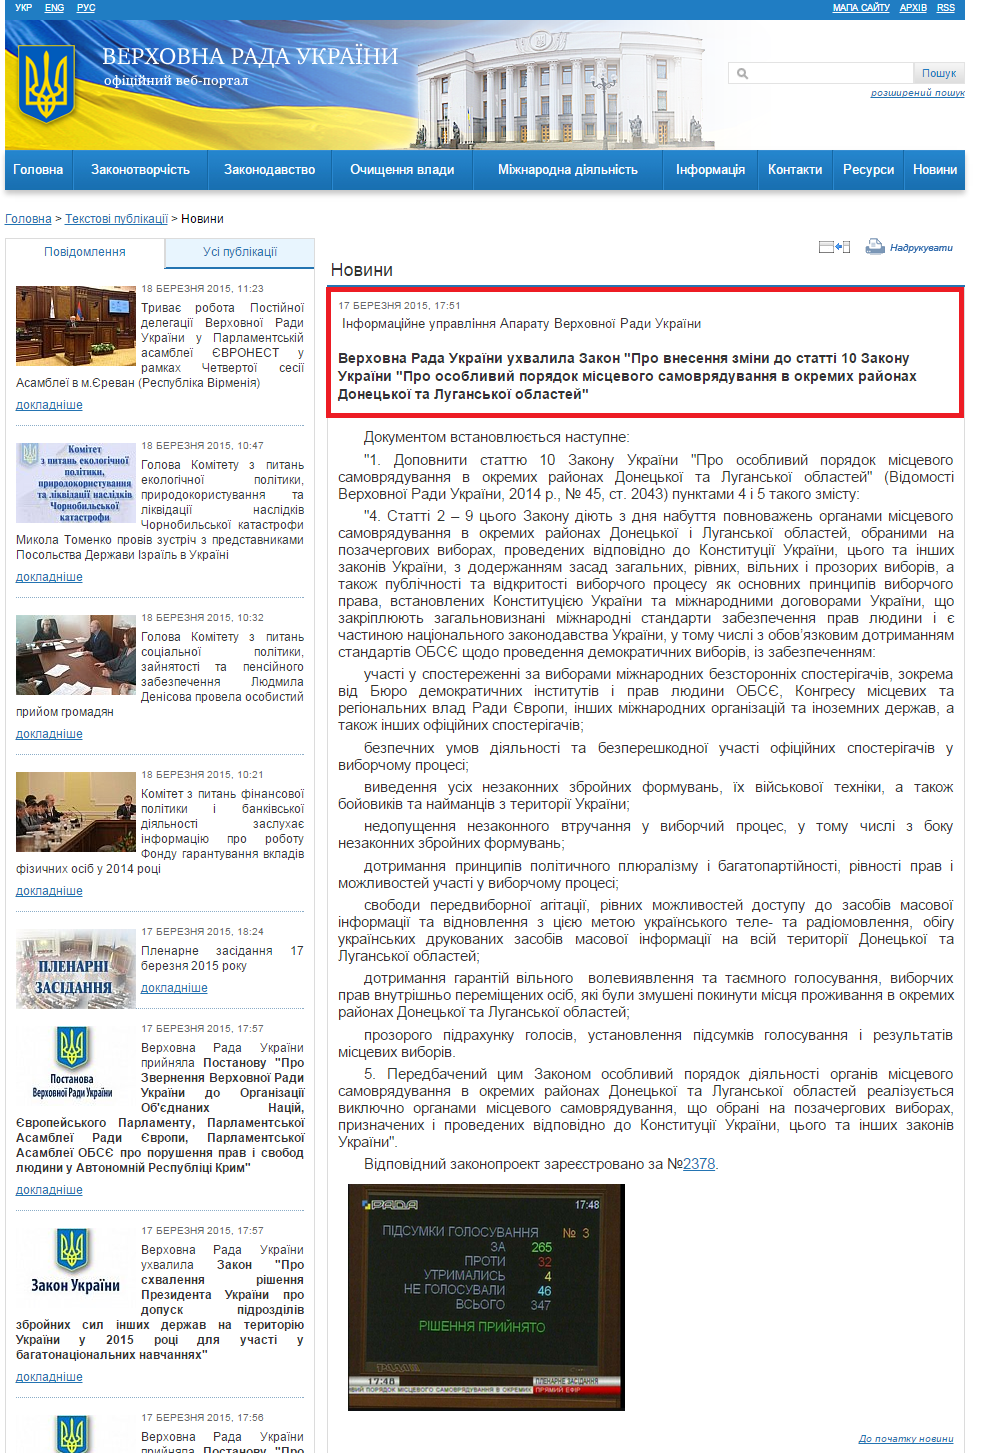 http://iportal.rada.gov.ua/news/Novyny/105801.html